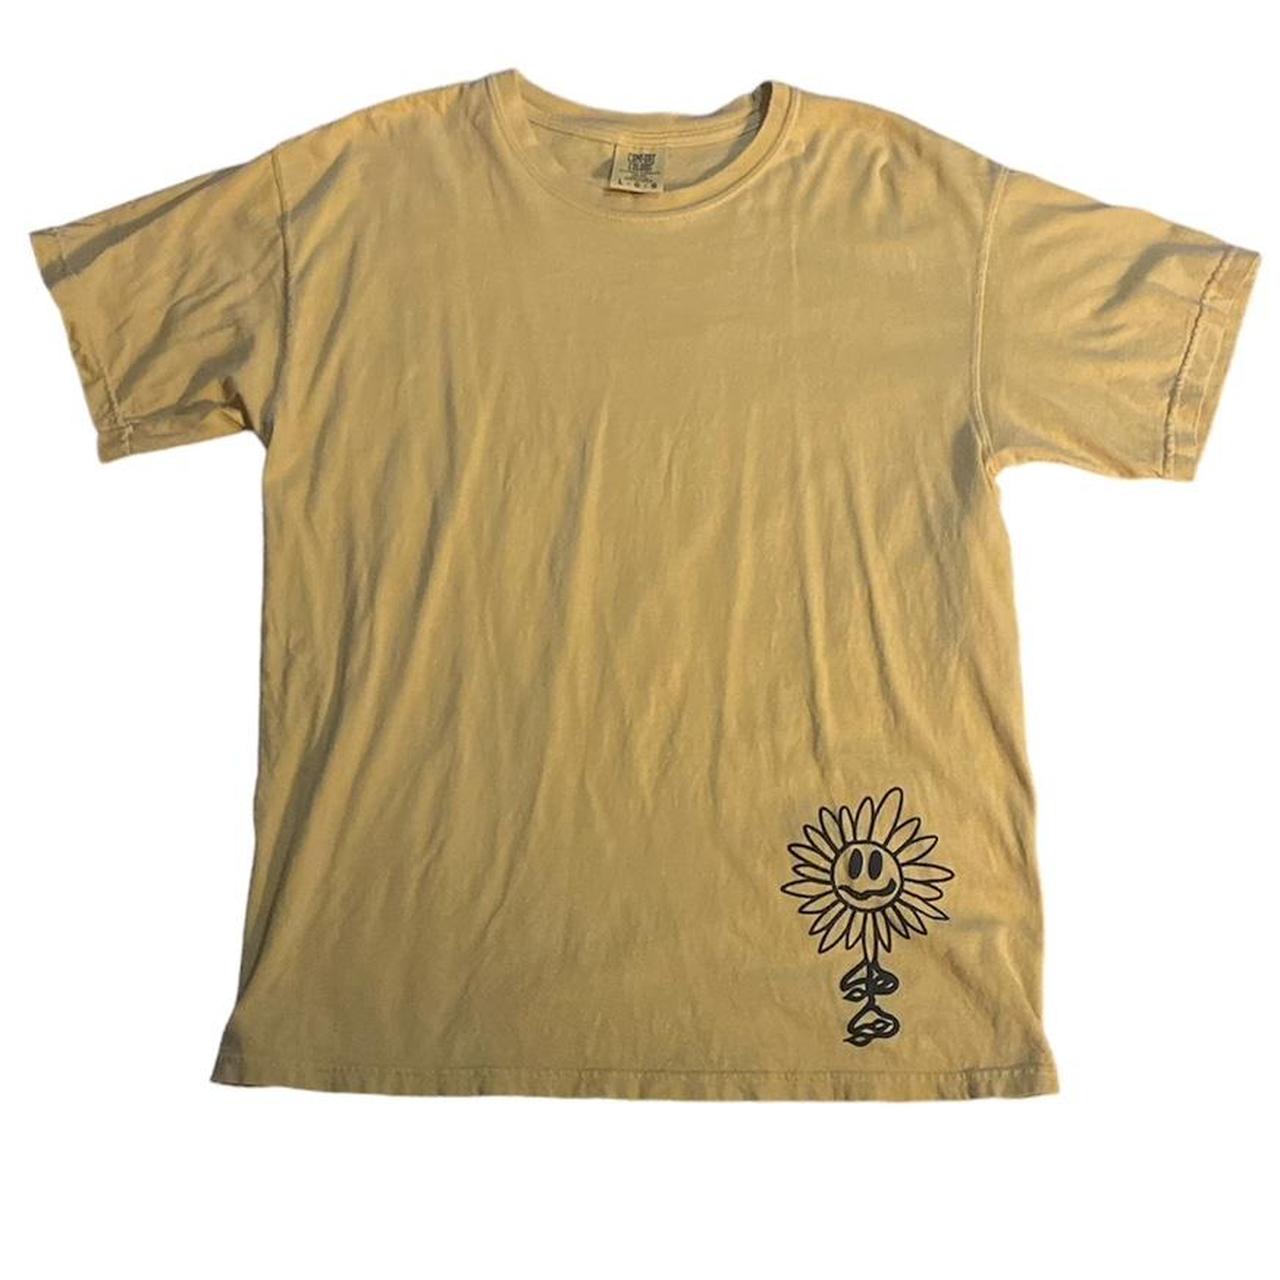 L Ghetto - Shirt Size Yellow World Depop Kids Colors Comfort T